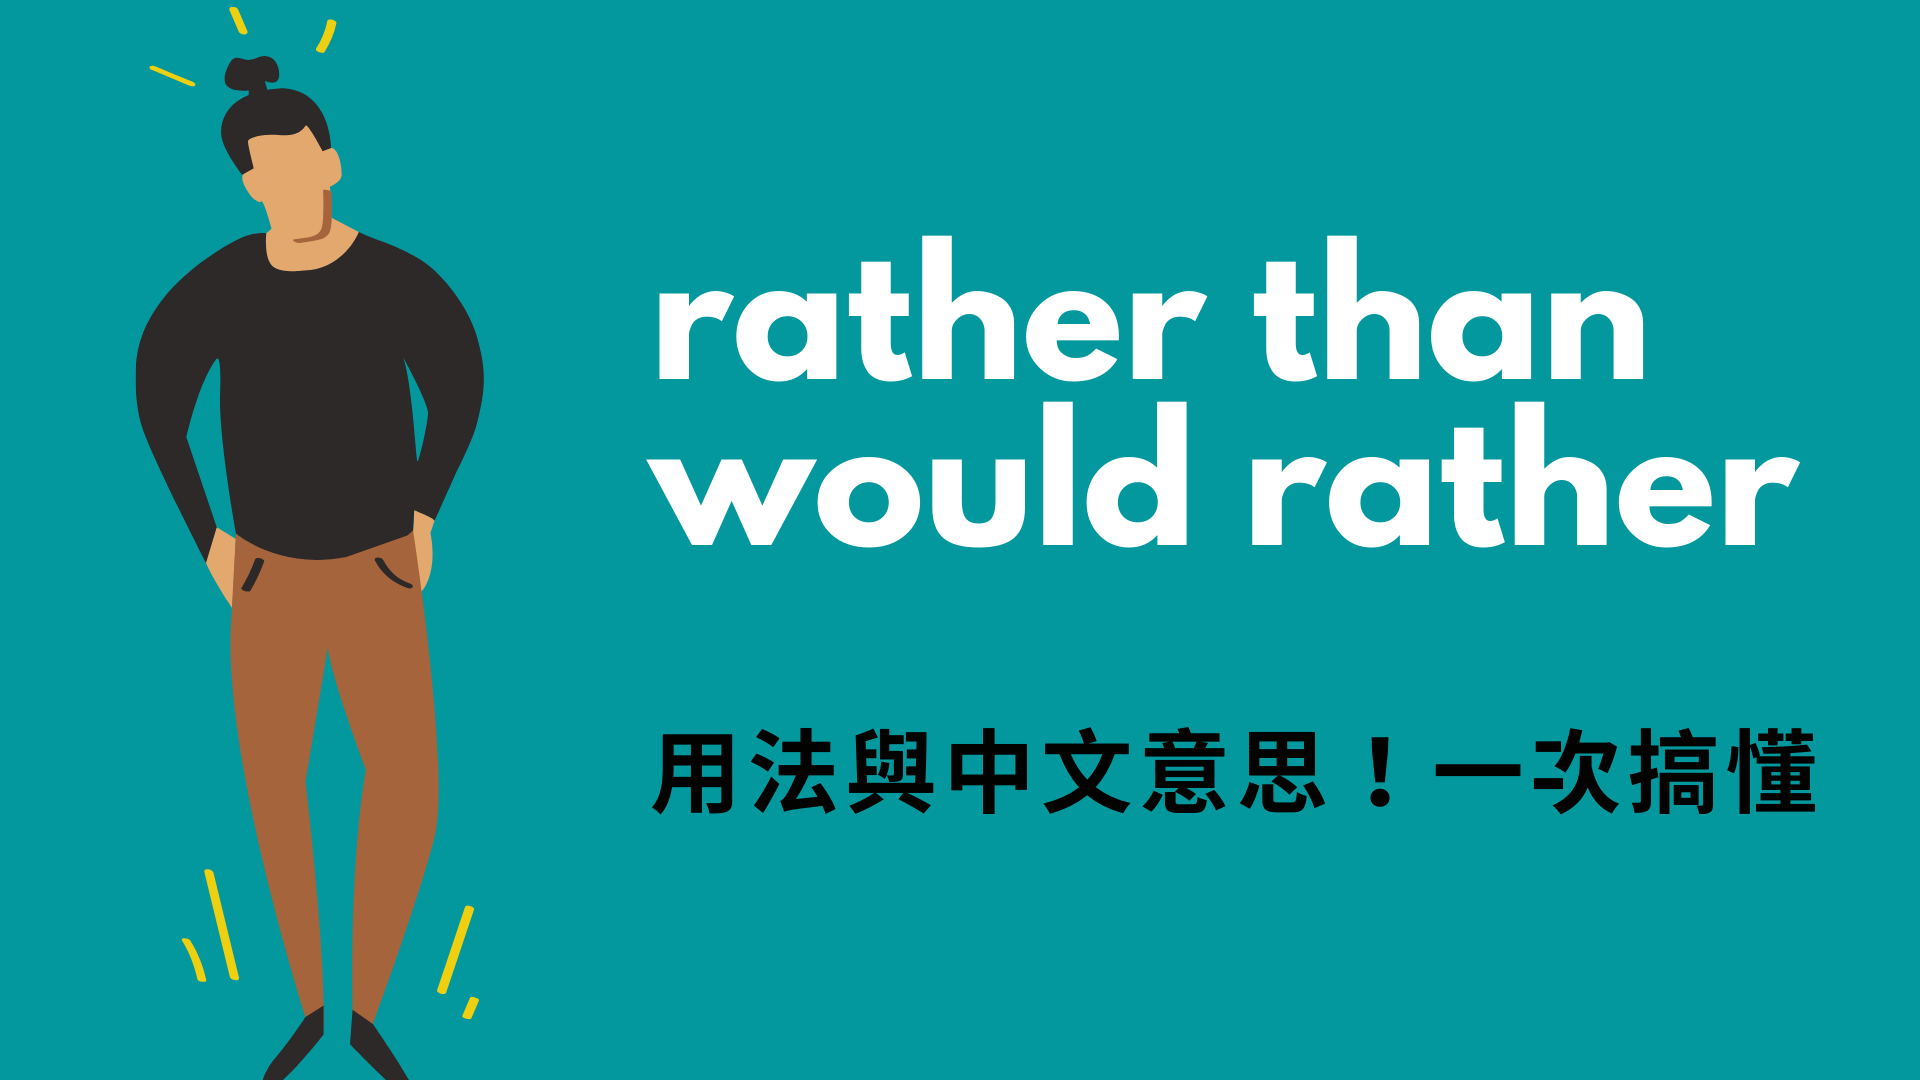 英文 rather than、would rather 用法跟中文意思！一次搞懂